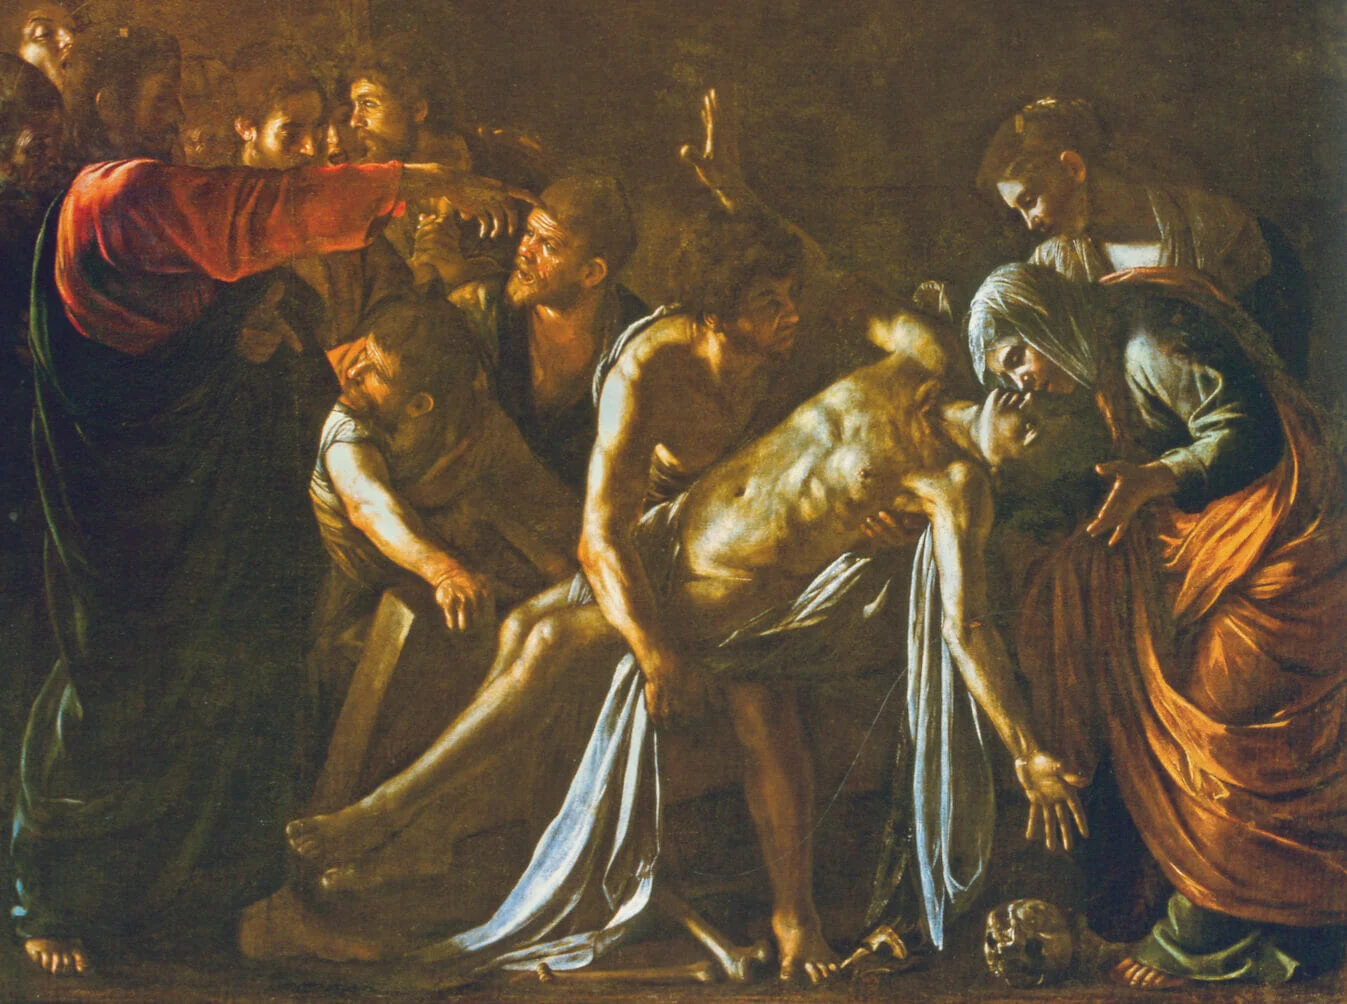 The Raising of Lazarus shows Caravaggio's innovations